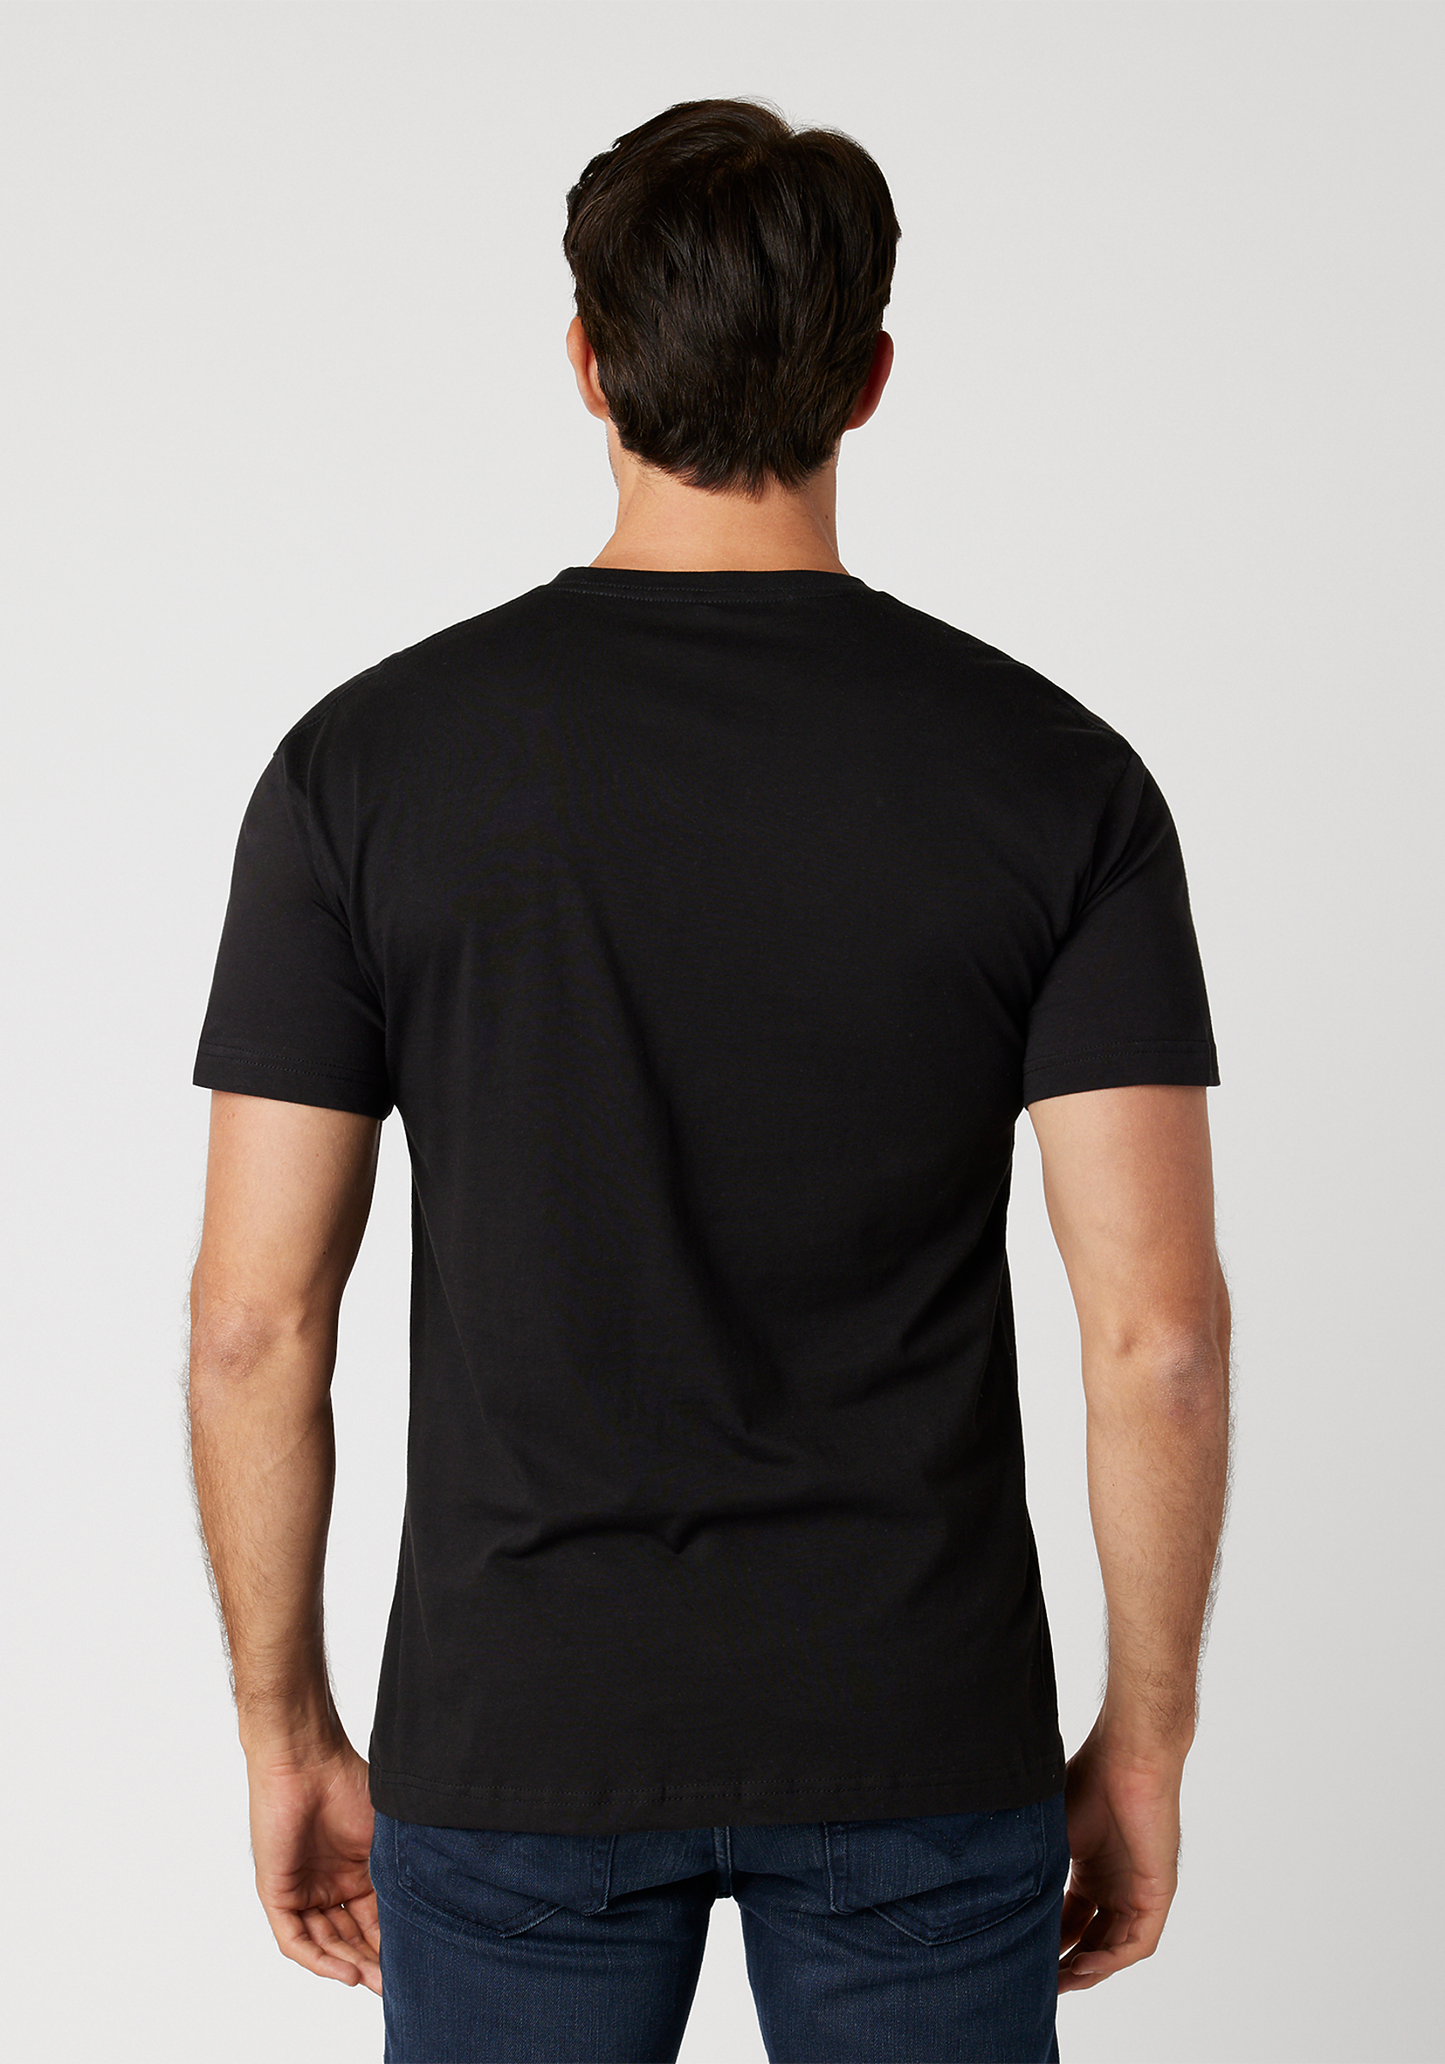 Barangay Tanod Unisex T-Shirt USA (Black)